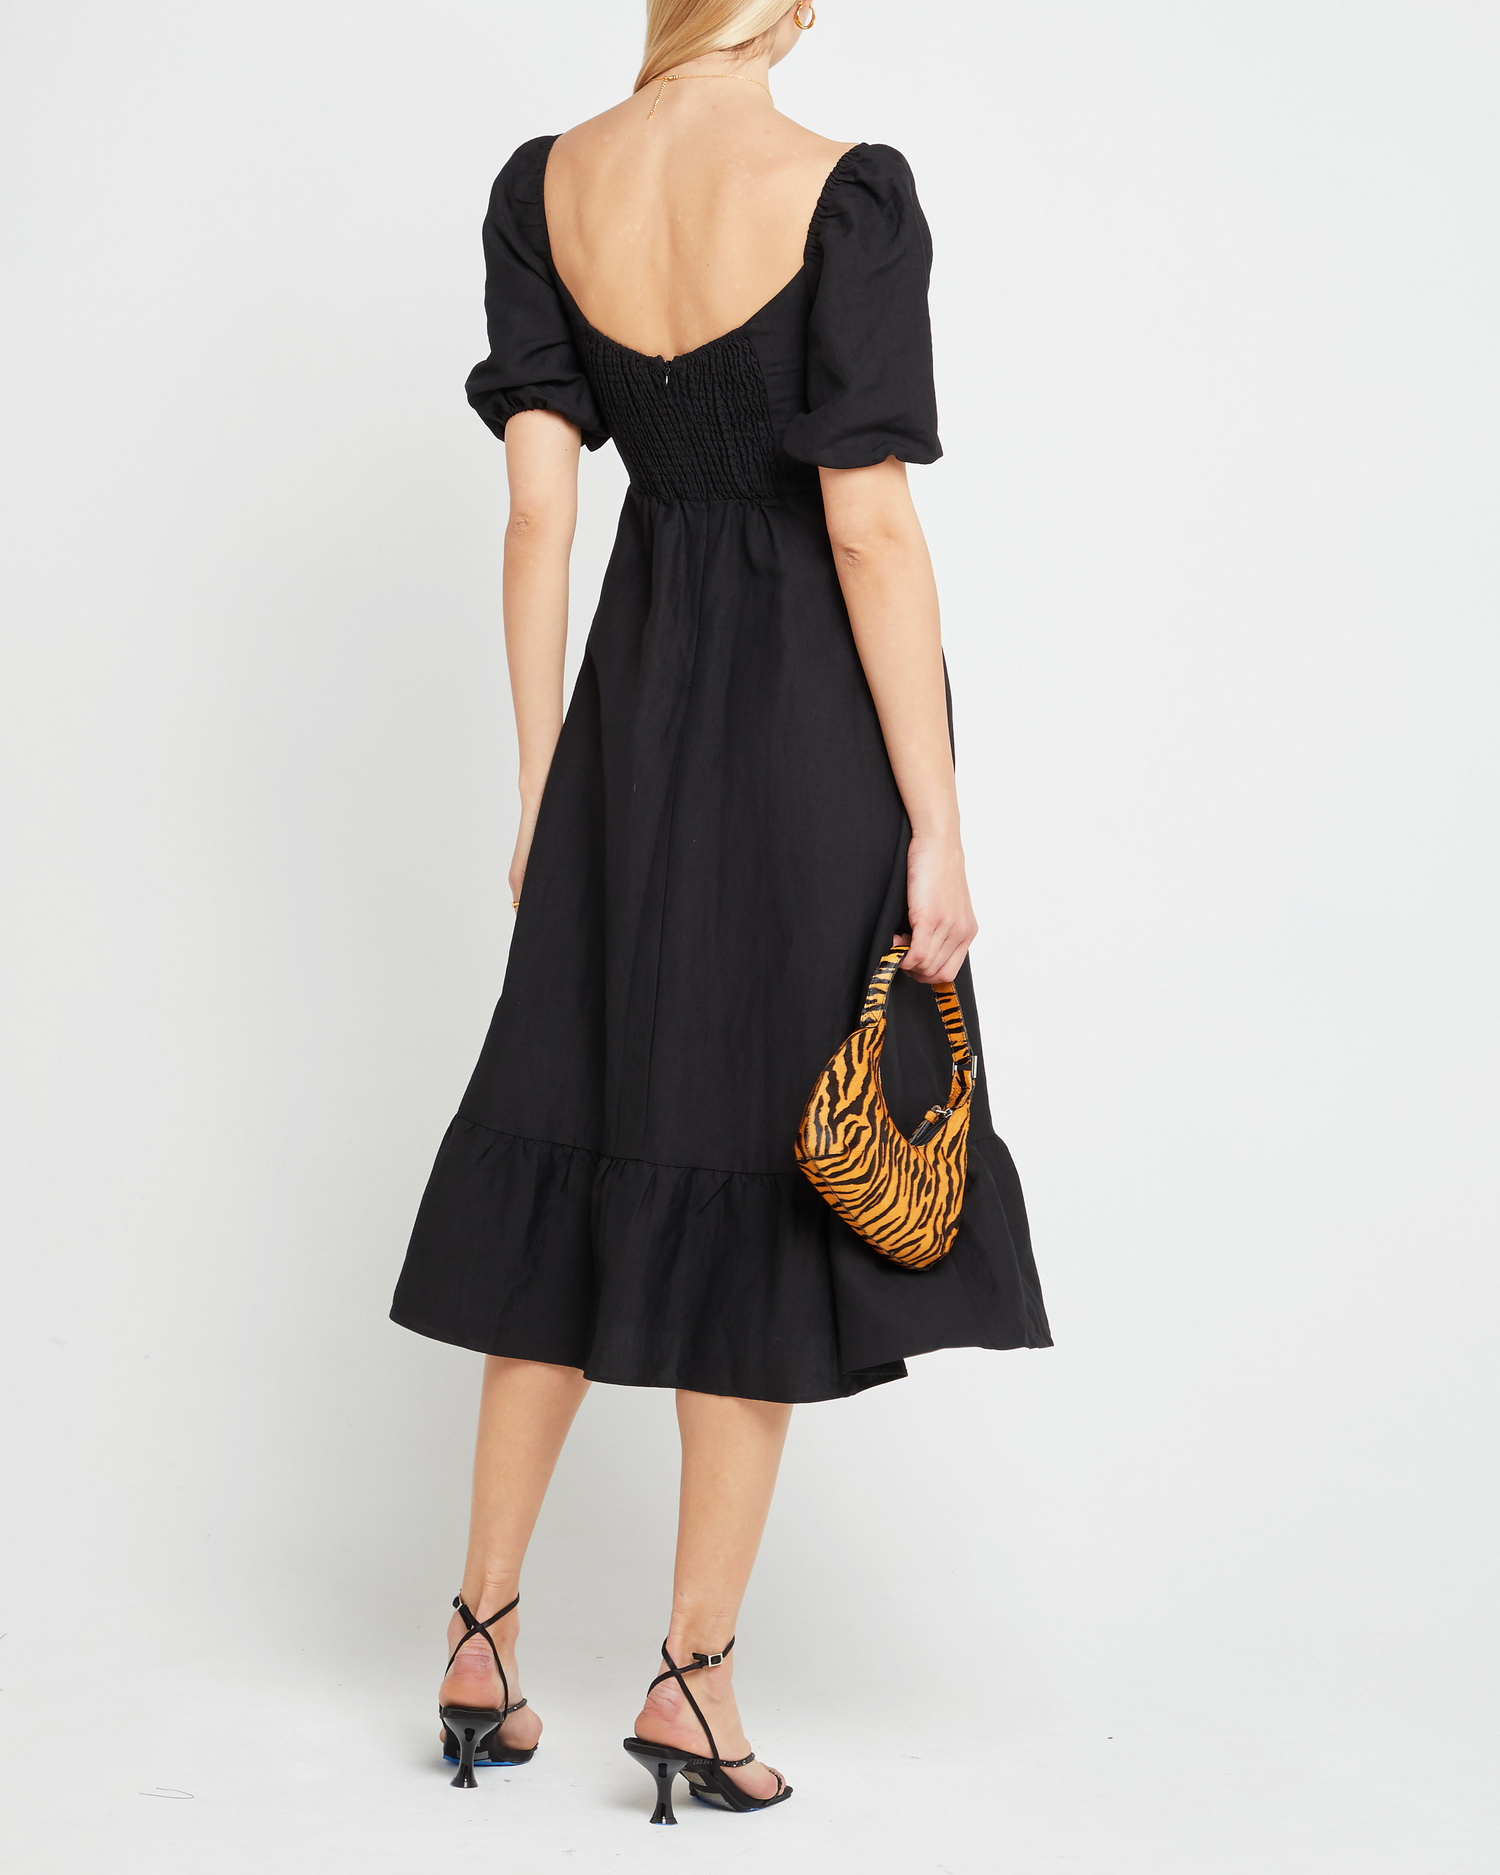 Second image of Violetta Midi Dress, a black midi dress, sweetheart neckline, short sleeves, puff sleeves, side slit